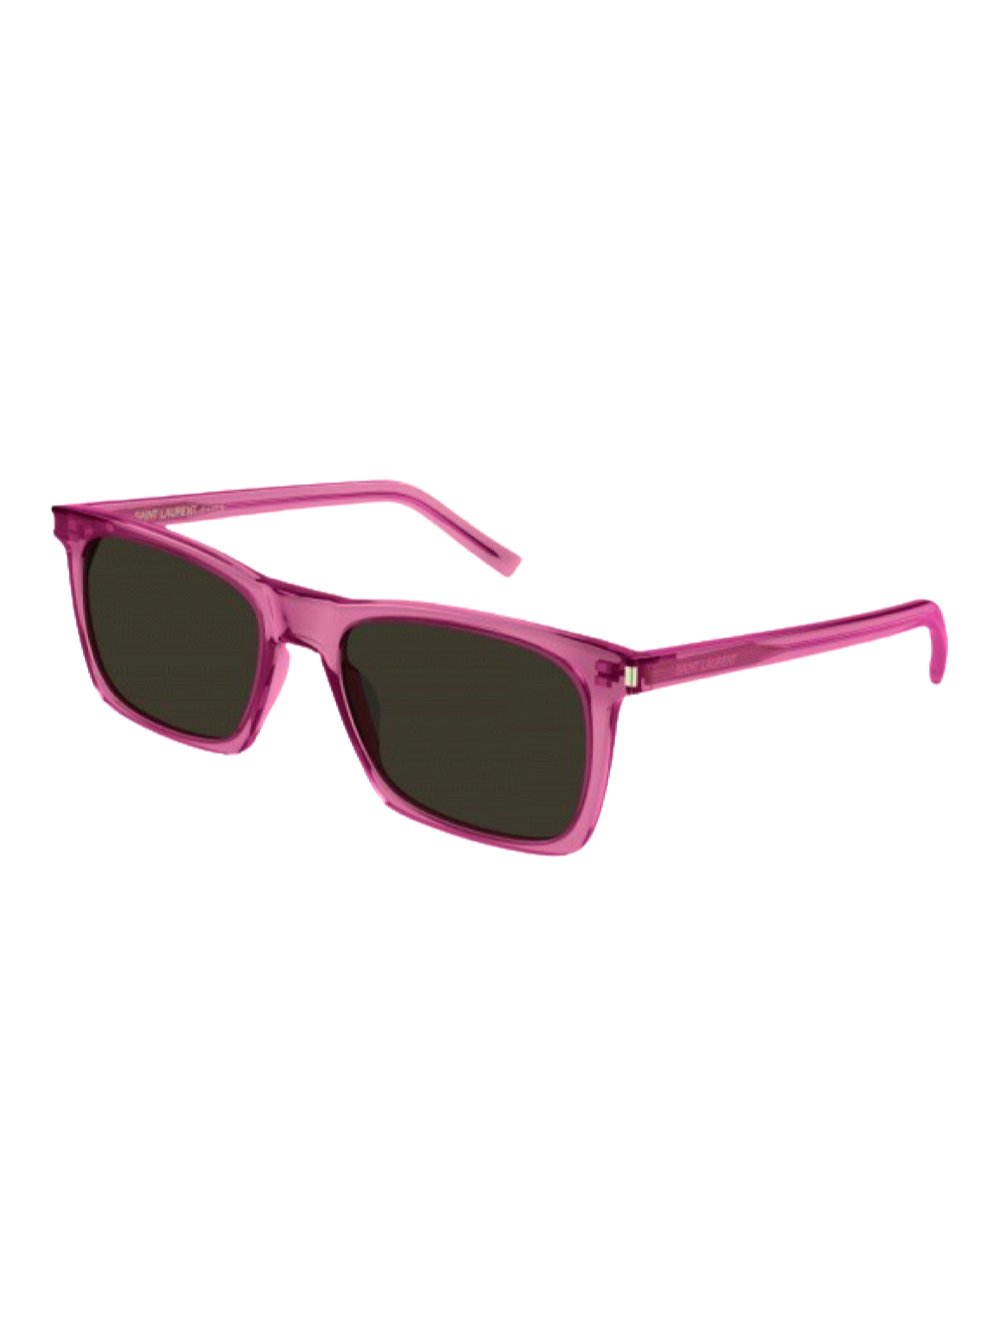 Saint Laurent Sunglasses SL 559-004